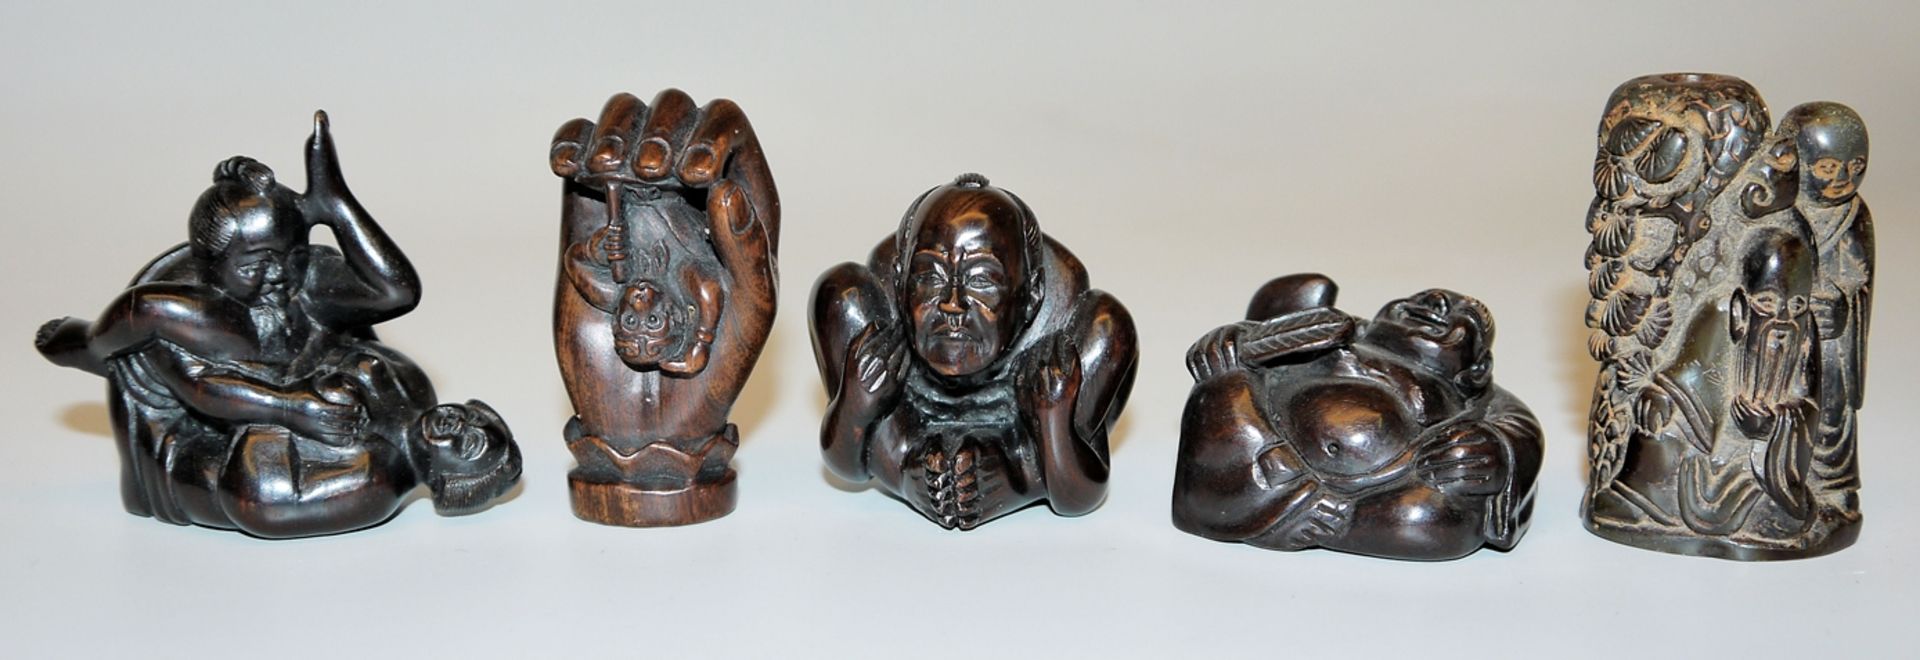 9 Japanese netsuke made of precious wood, human and legendary figures of all kinds - Image 3 of 3